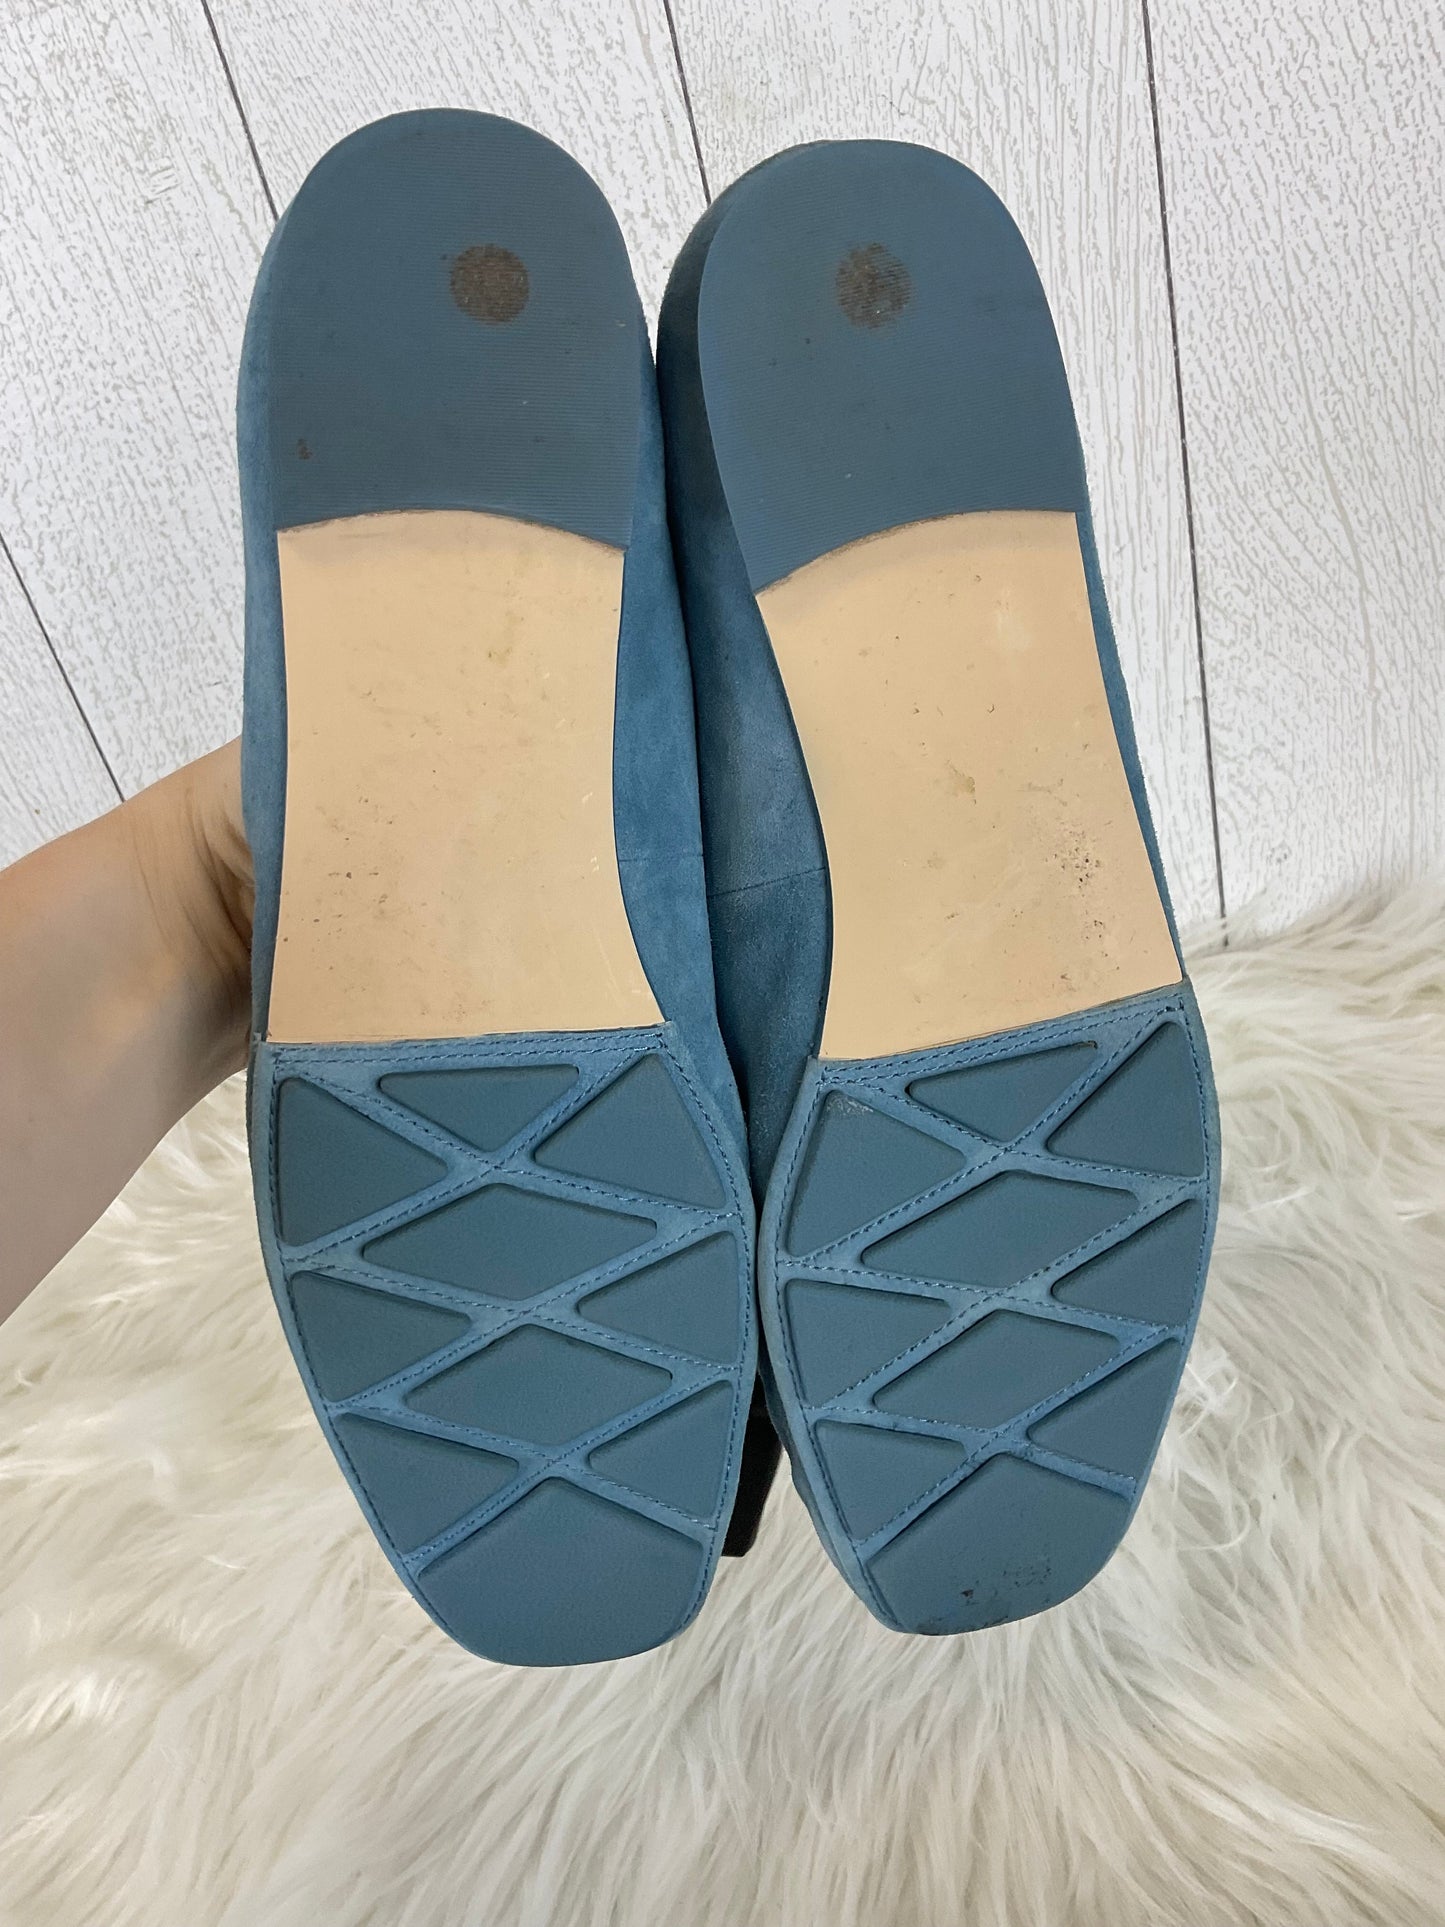 Blue Shoes Designer Tory Burch, Size 9.5